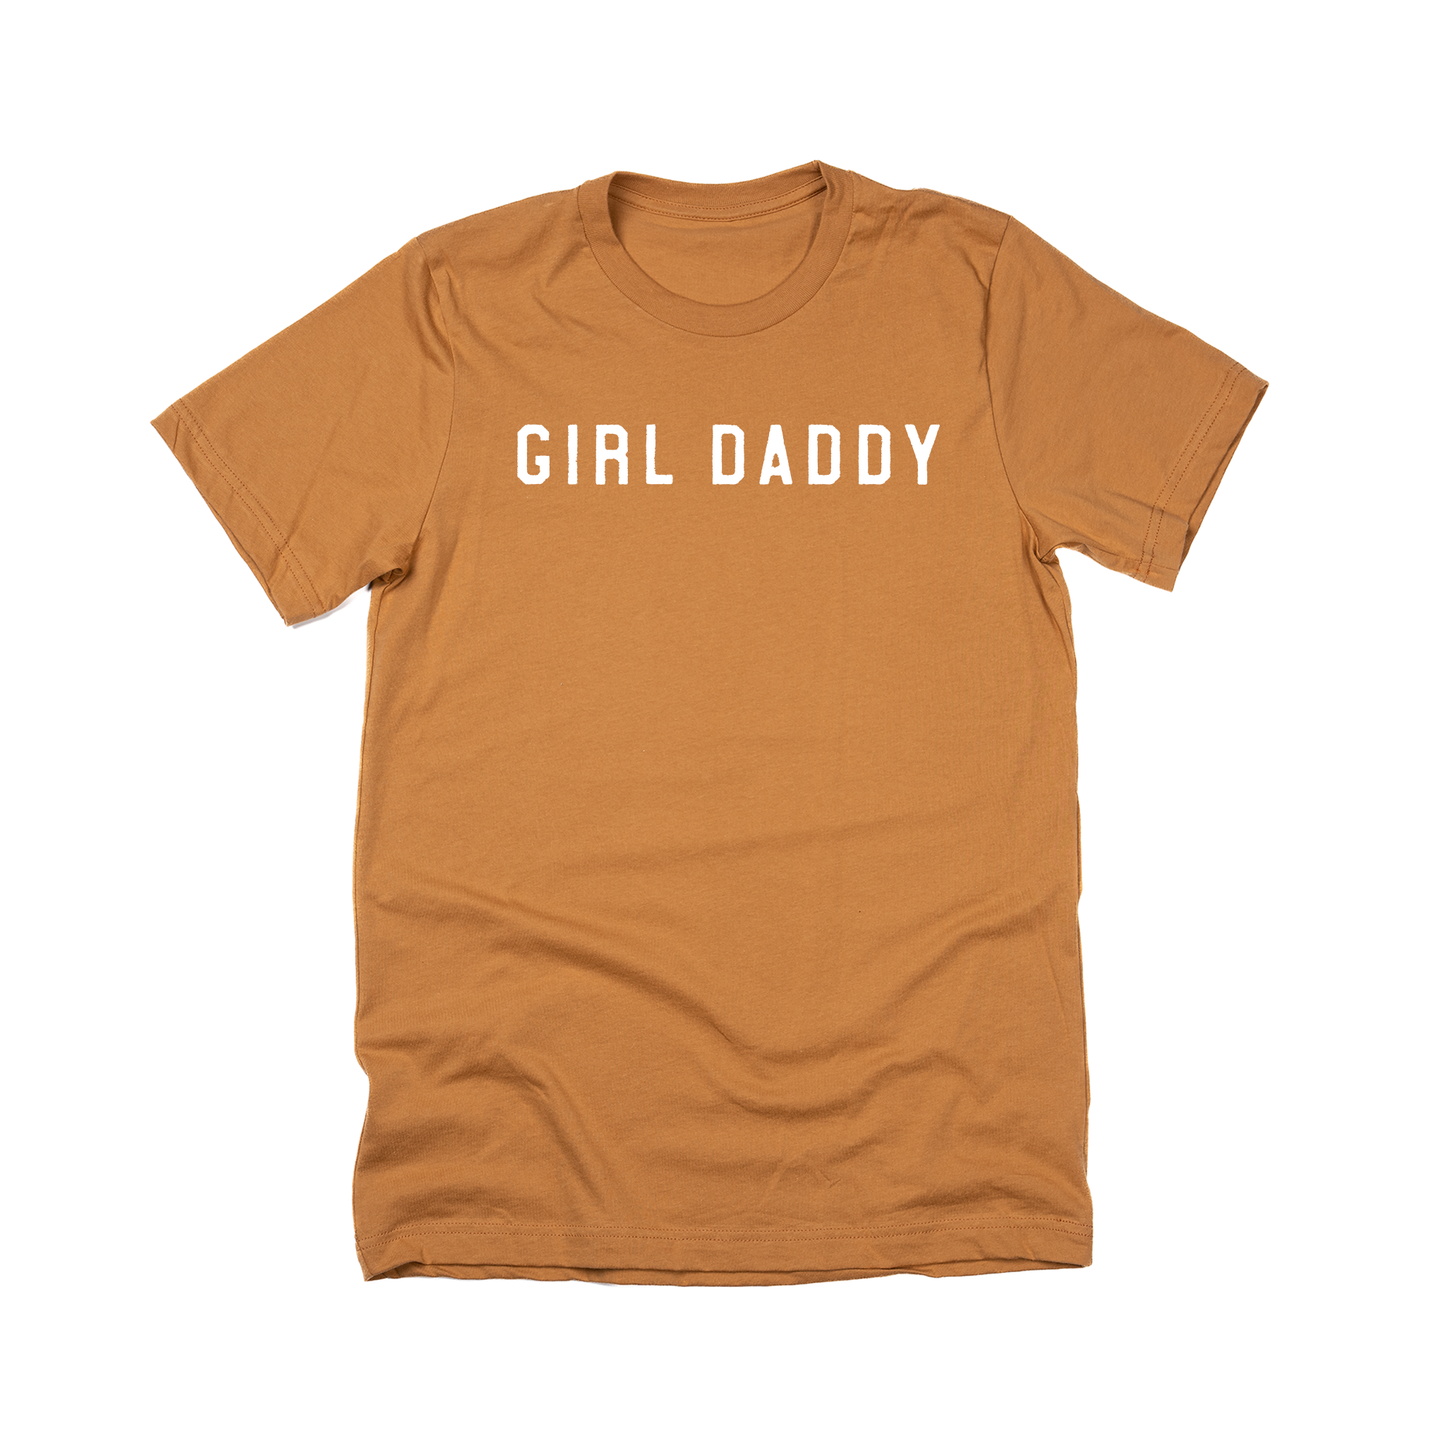 Girl Daddy (White) - Tee (Camel)